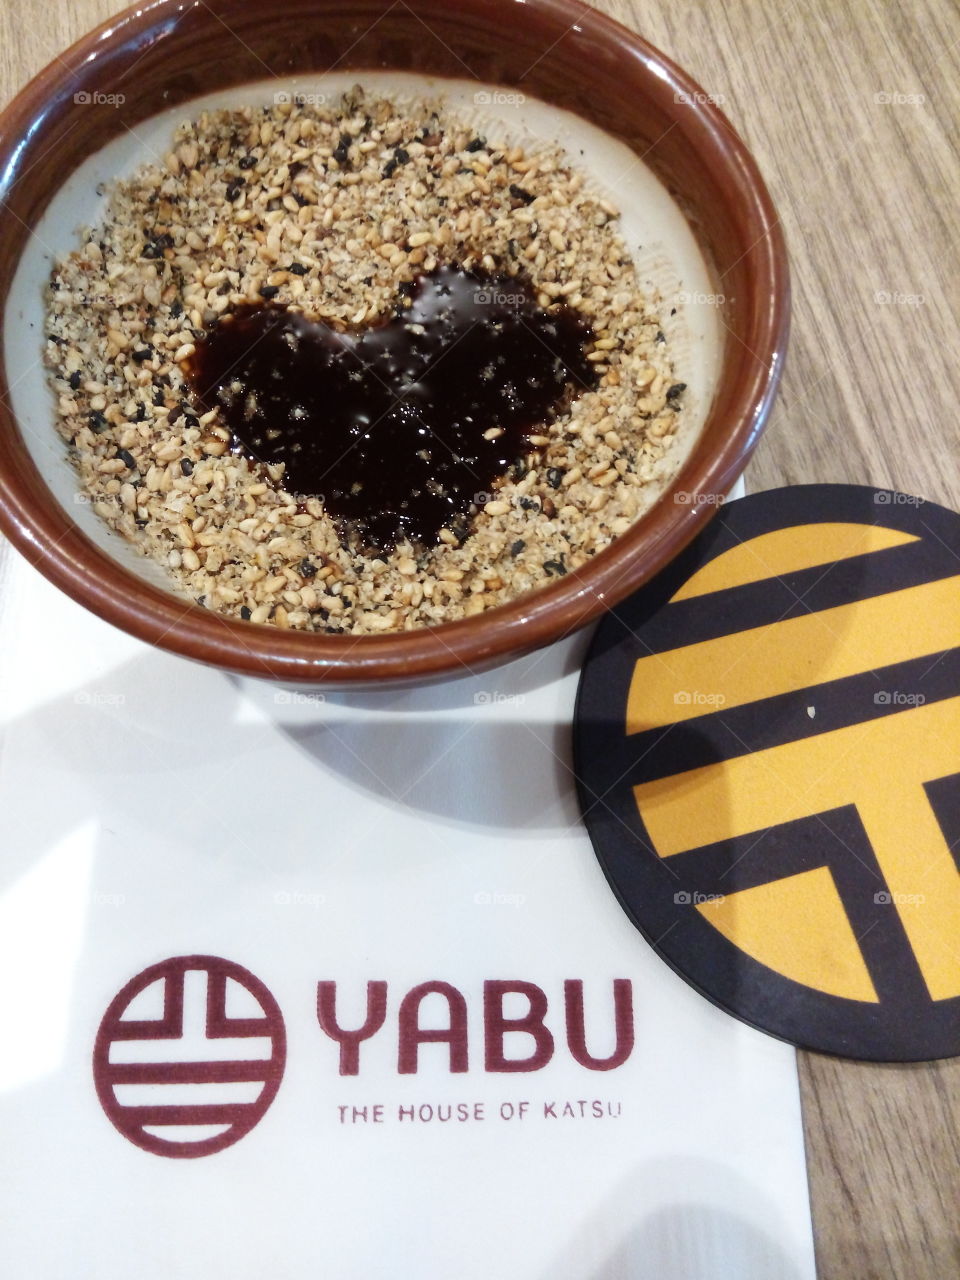 yabu sauce